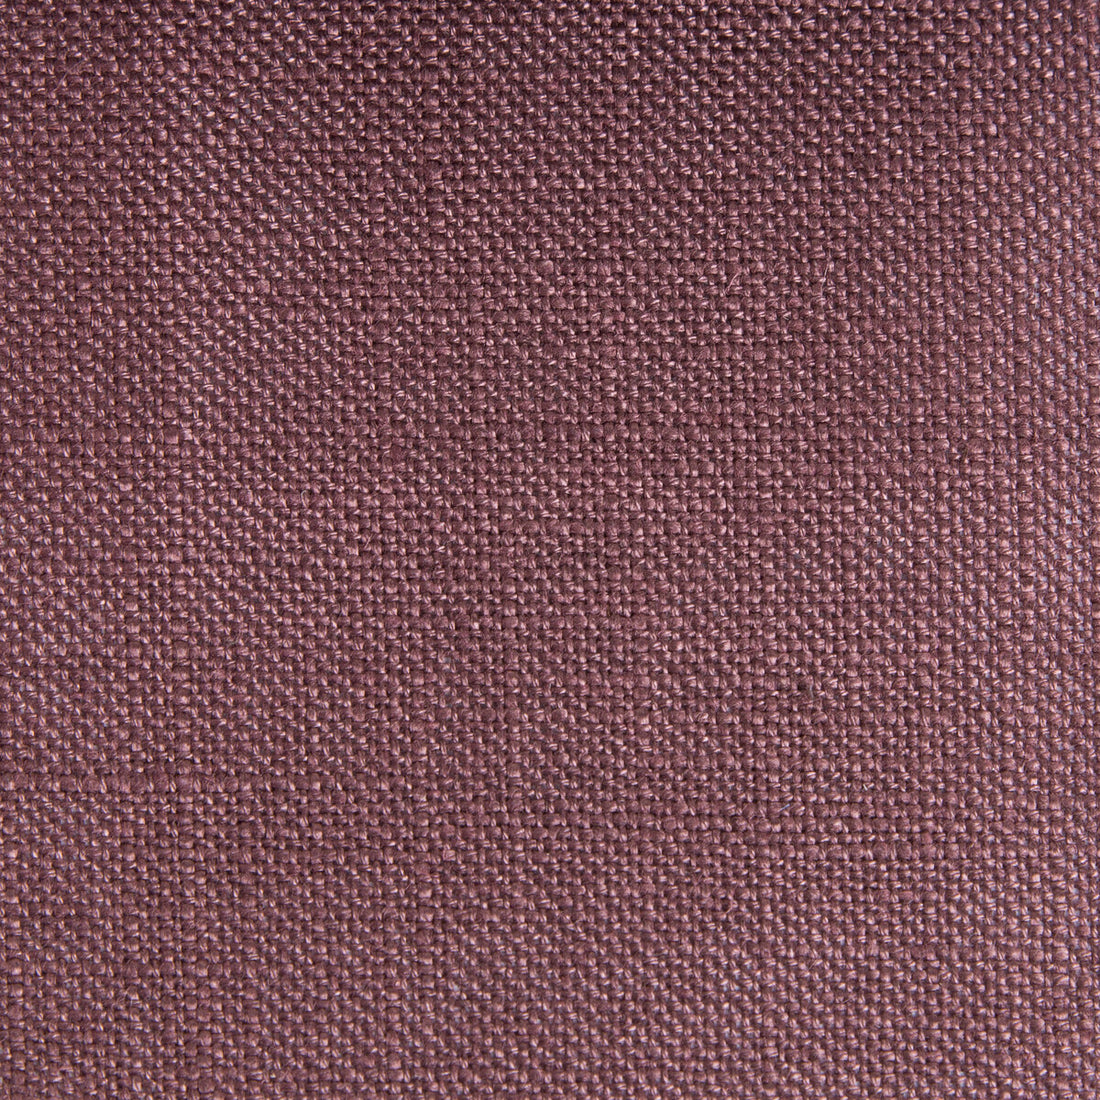 Peru fabric in berenjena color - pattern GDT5548.027.0 - by Gaston y Daniela in the Gaston Nuevo Mundo collection